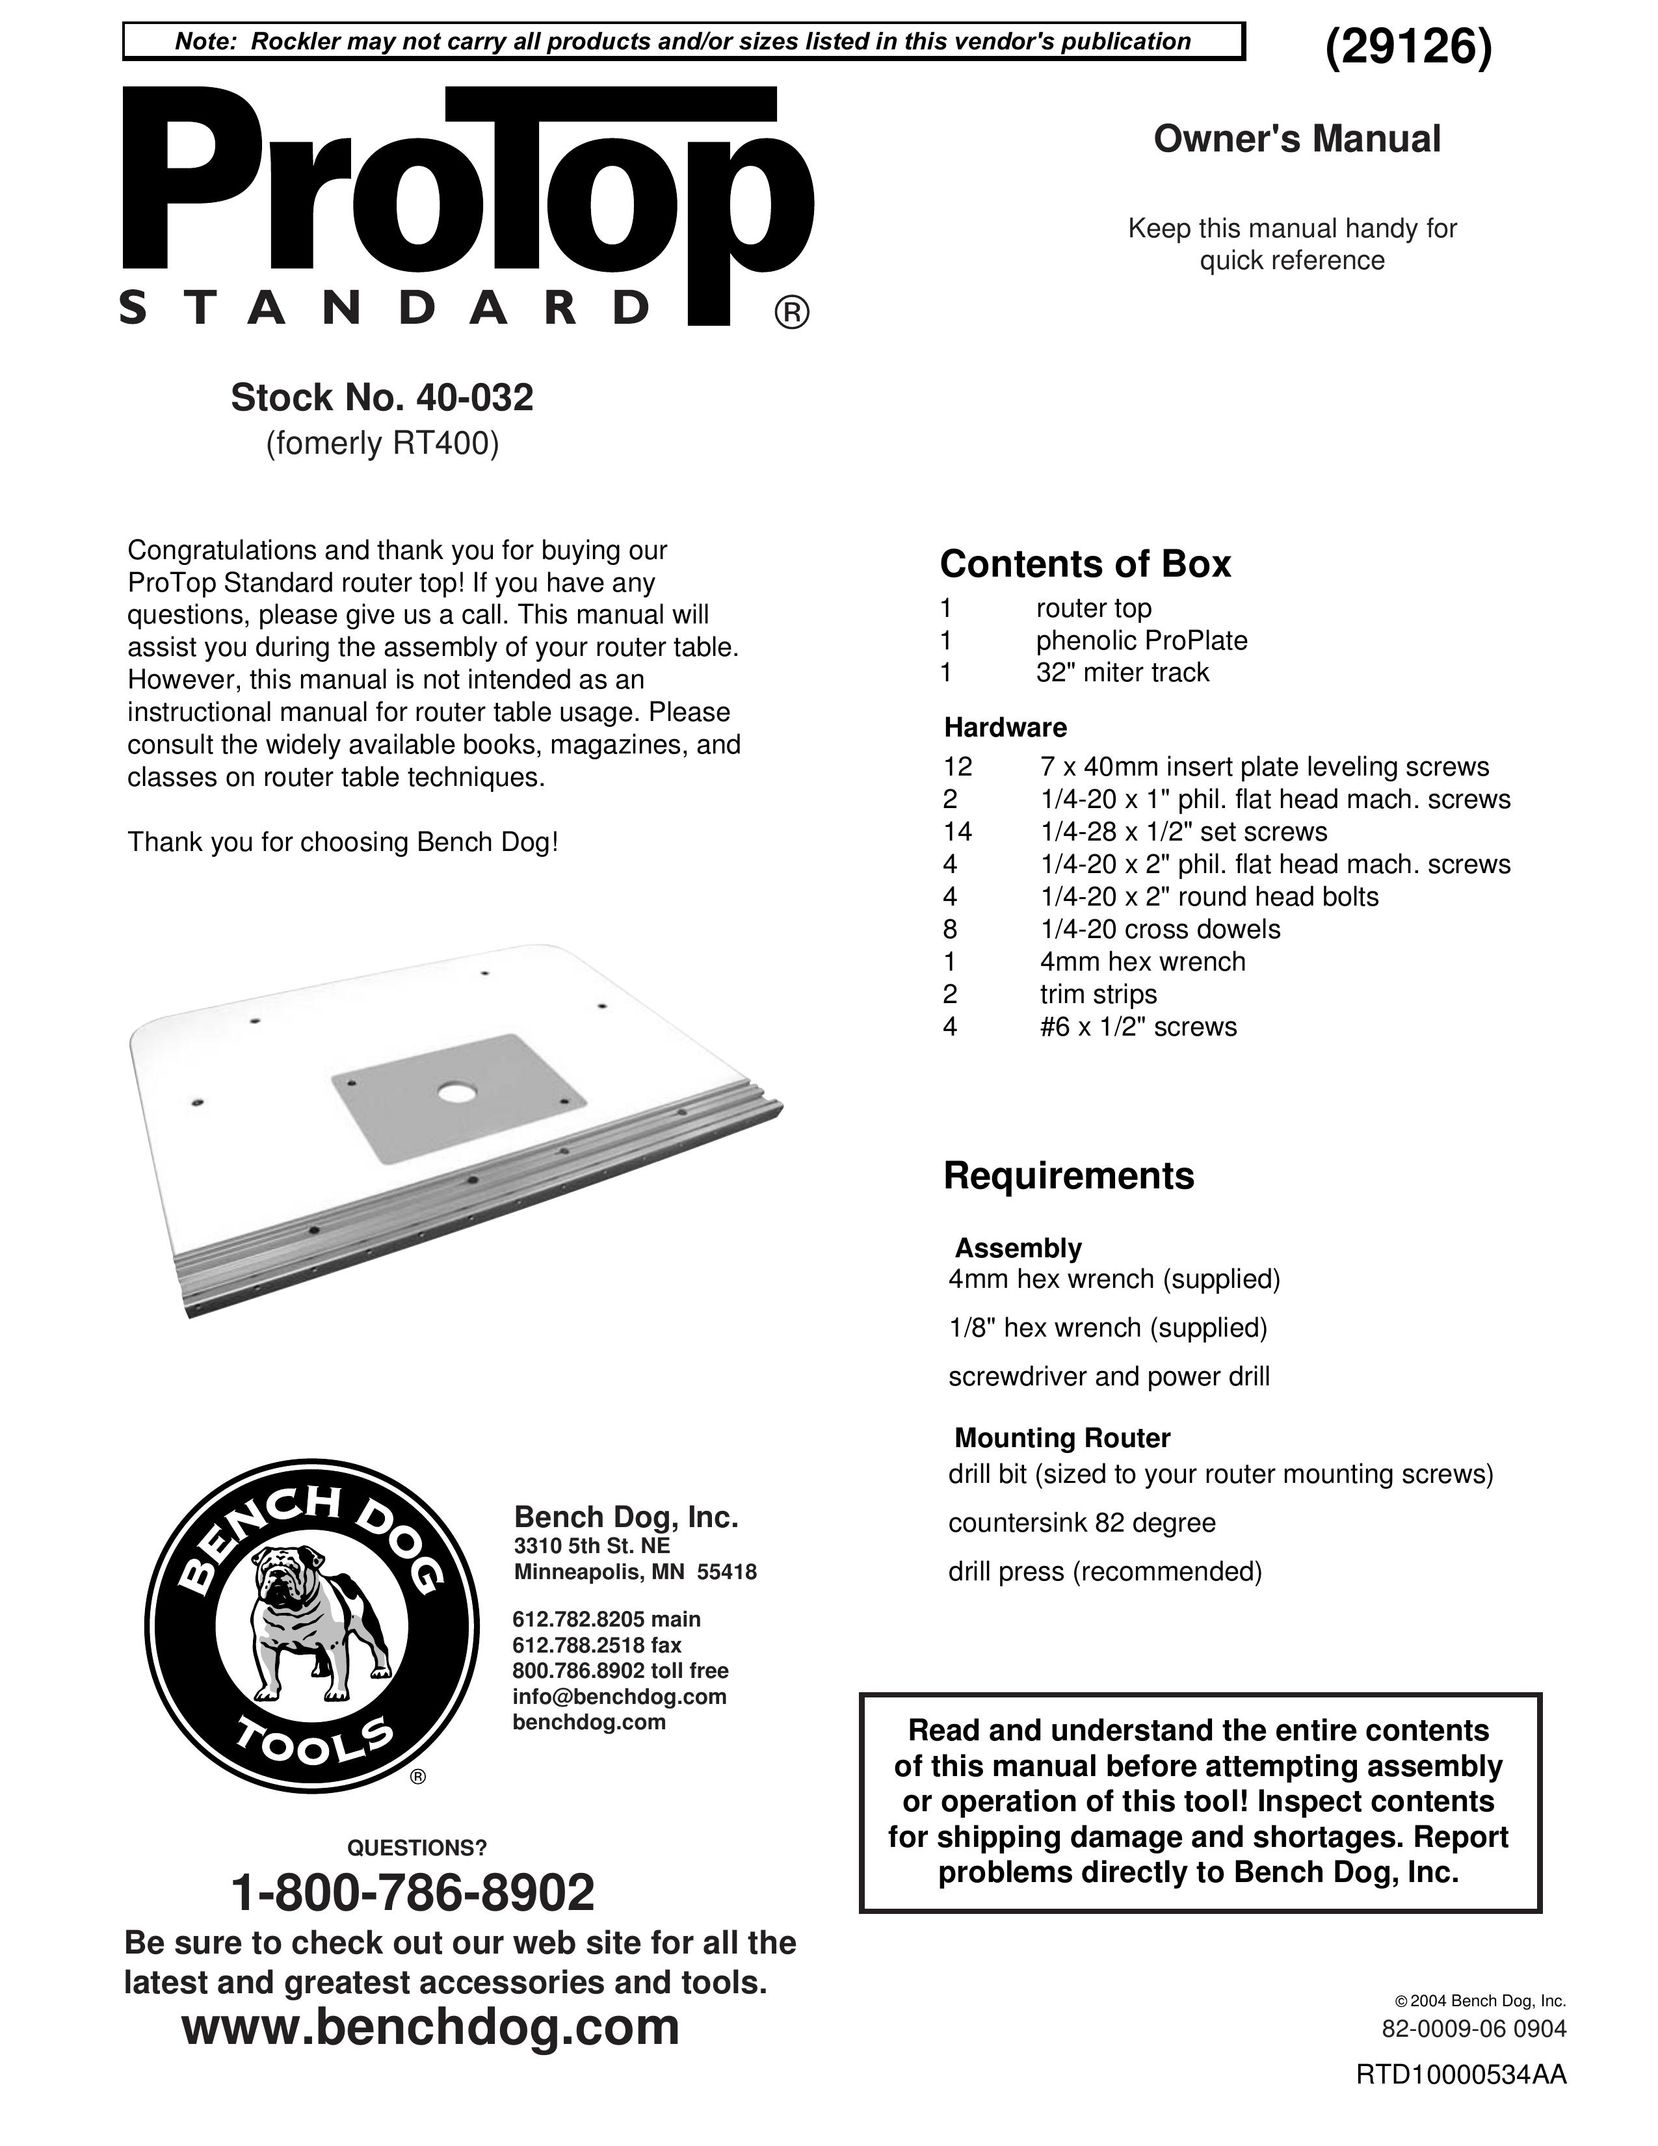 Bench Dog Tools RT400 Personal Computer User Manual